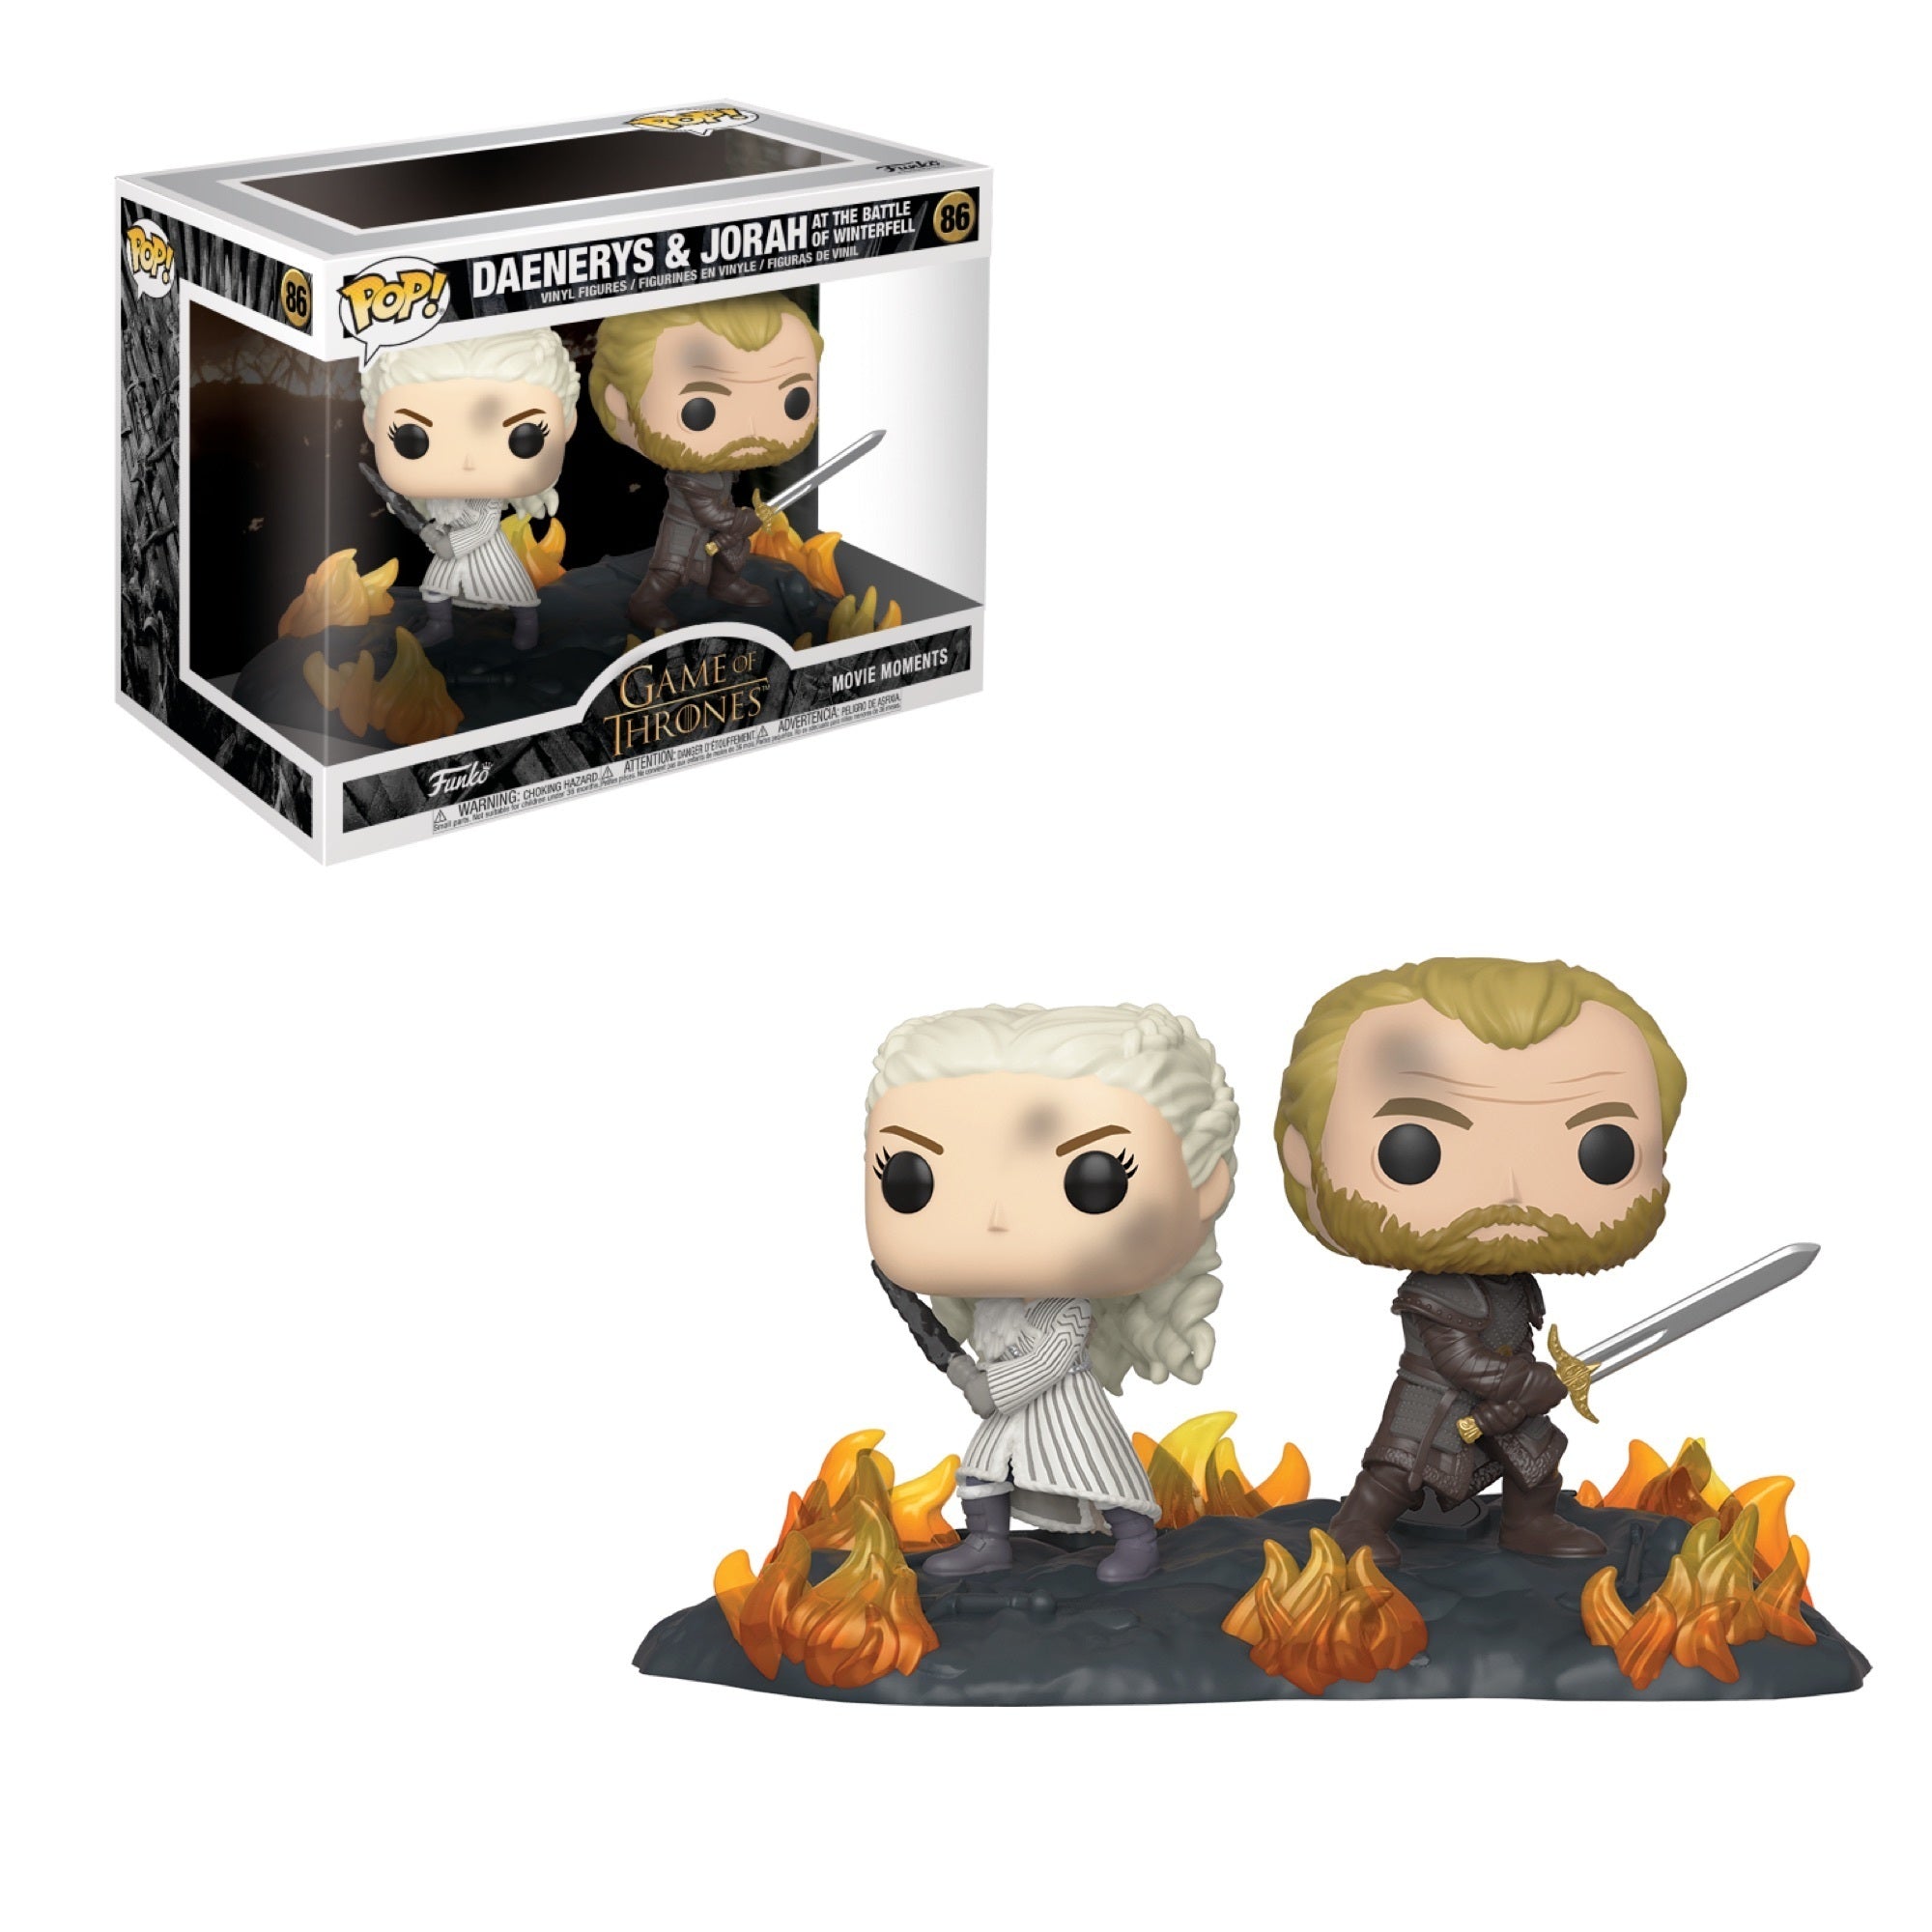 Daenerys & Jorah at the Battle of Winterfell #86 Pop! Vinyl